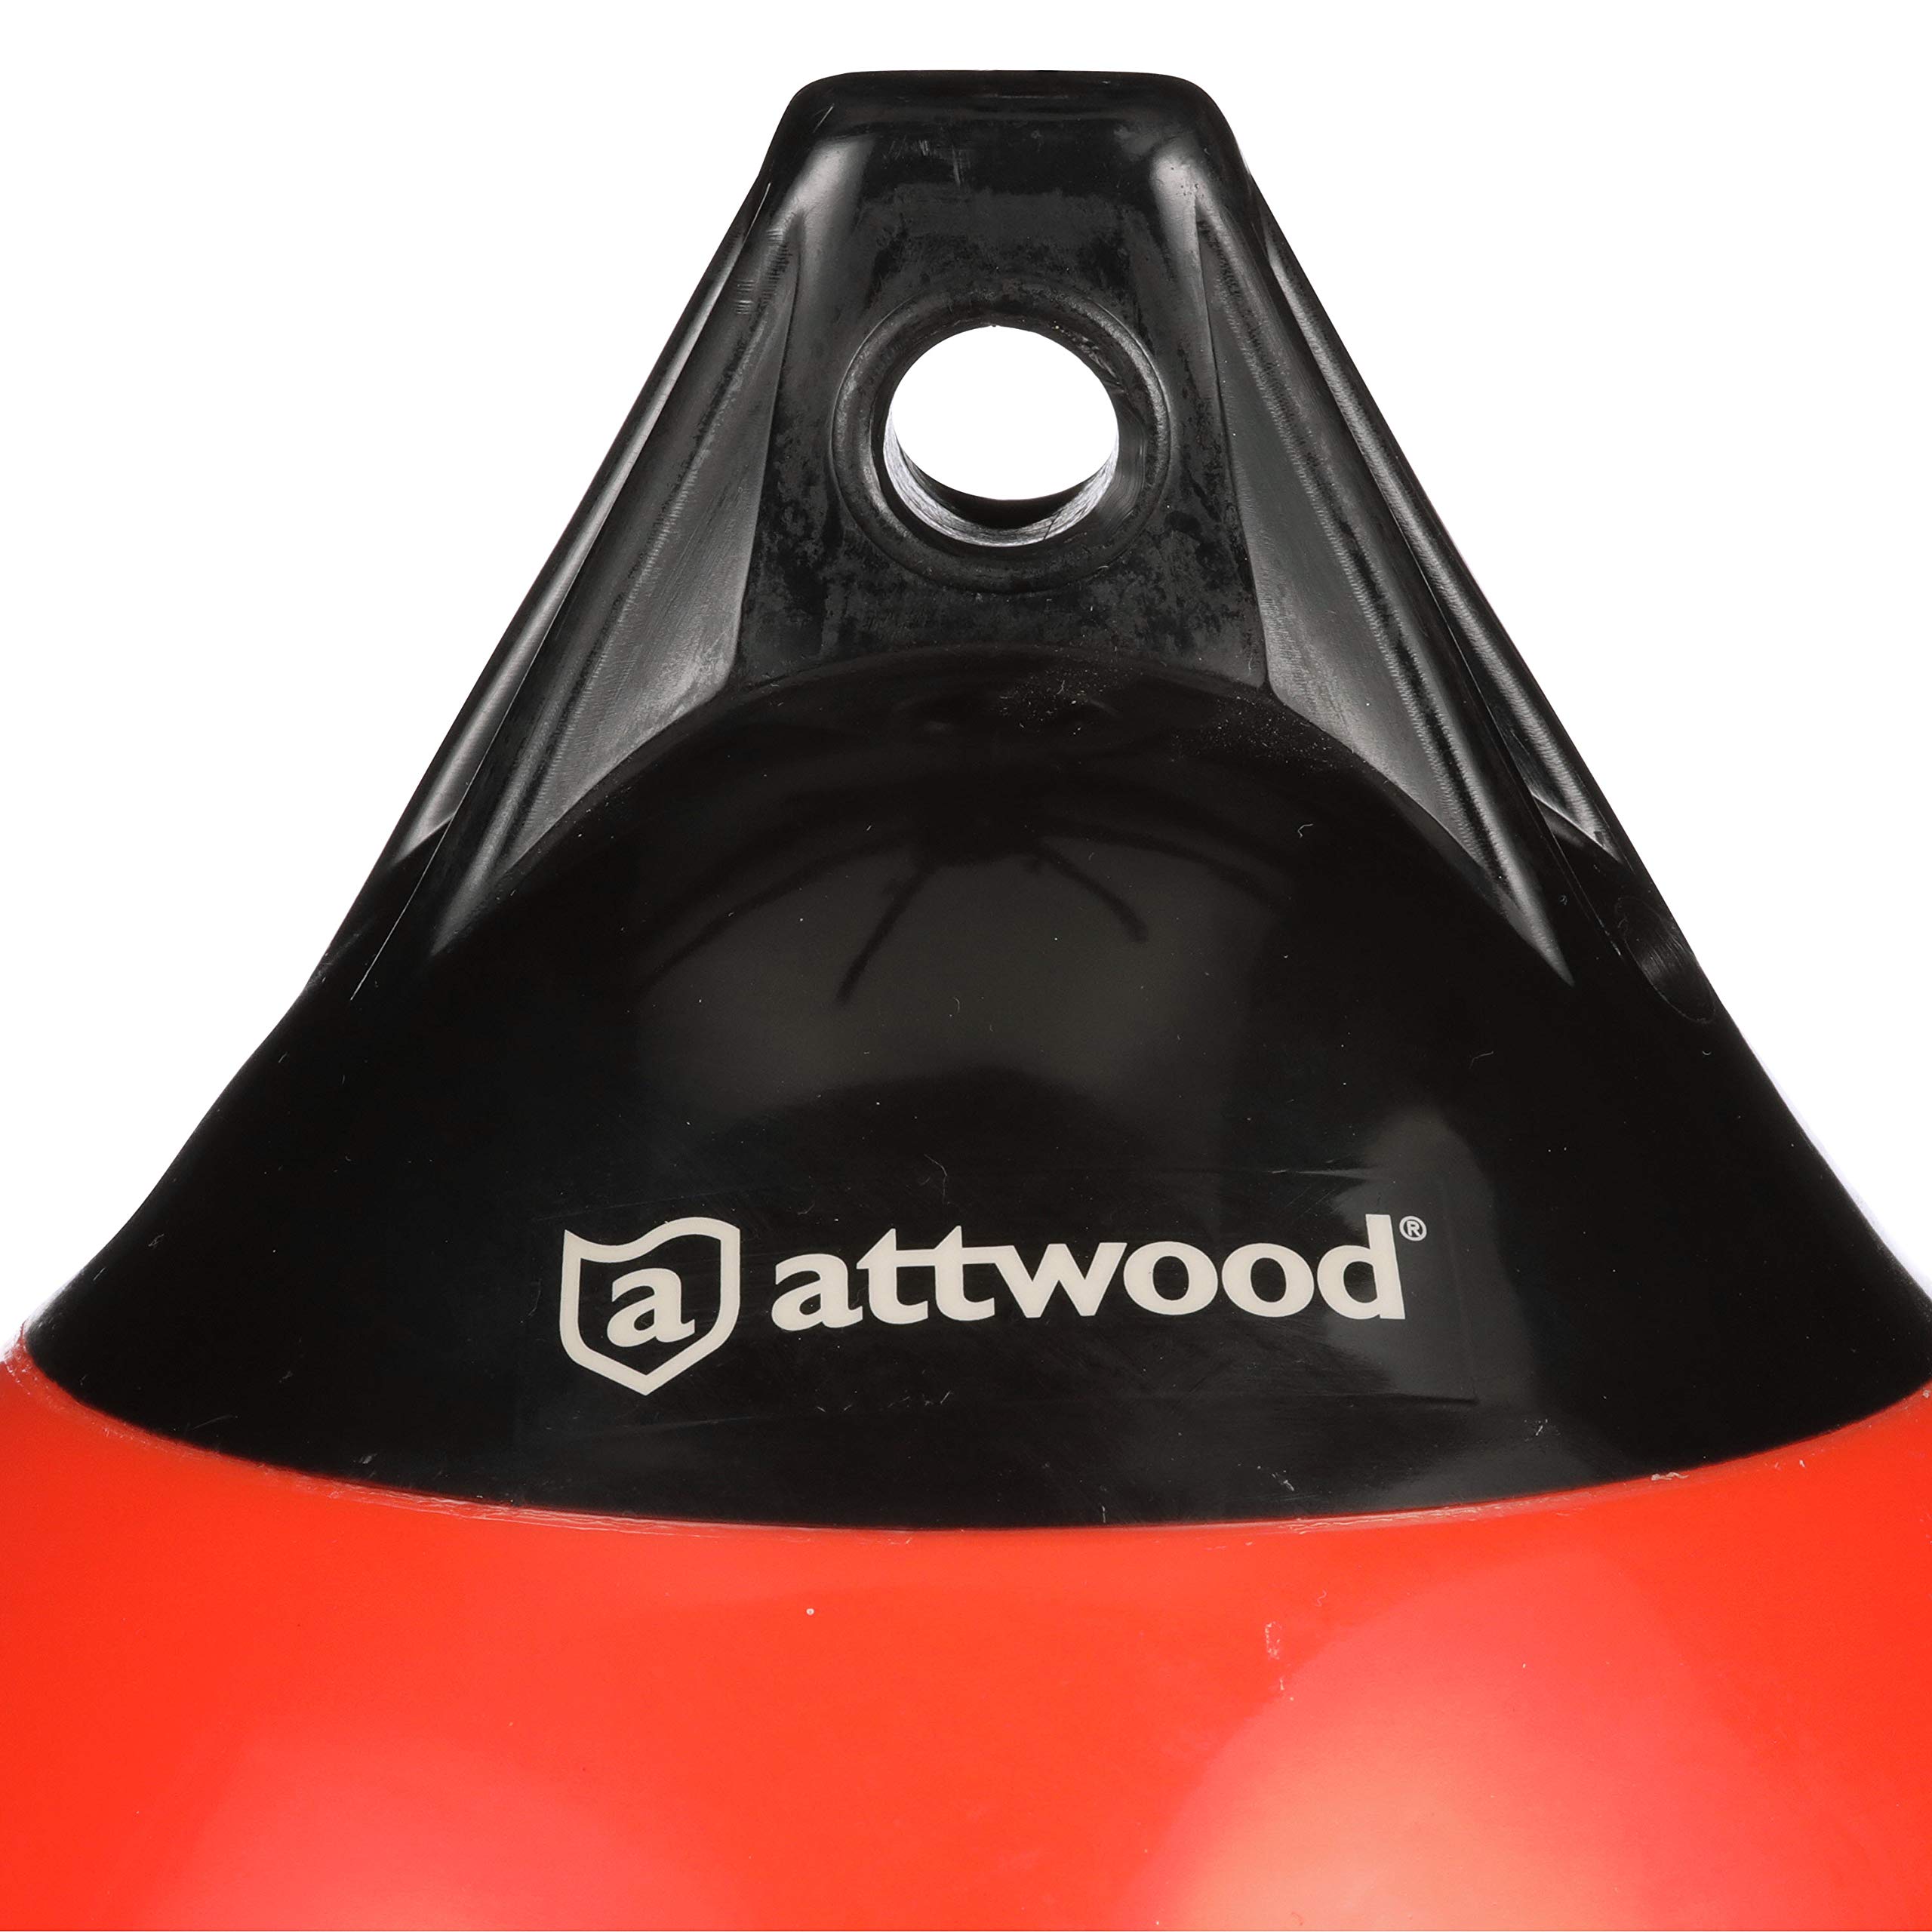 Attwood 9350-4 Anchor Buoy, 9 Inches Long, Heavy-Duty Marine-Grade Vinyl, Built-In UV Inhibitors, MicroGuard® Mold Protection